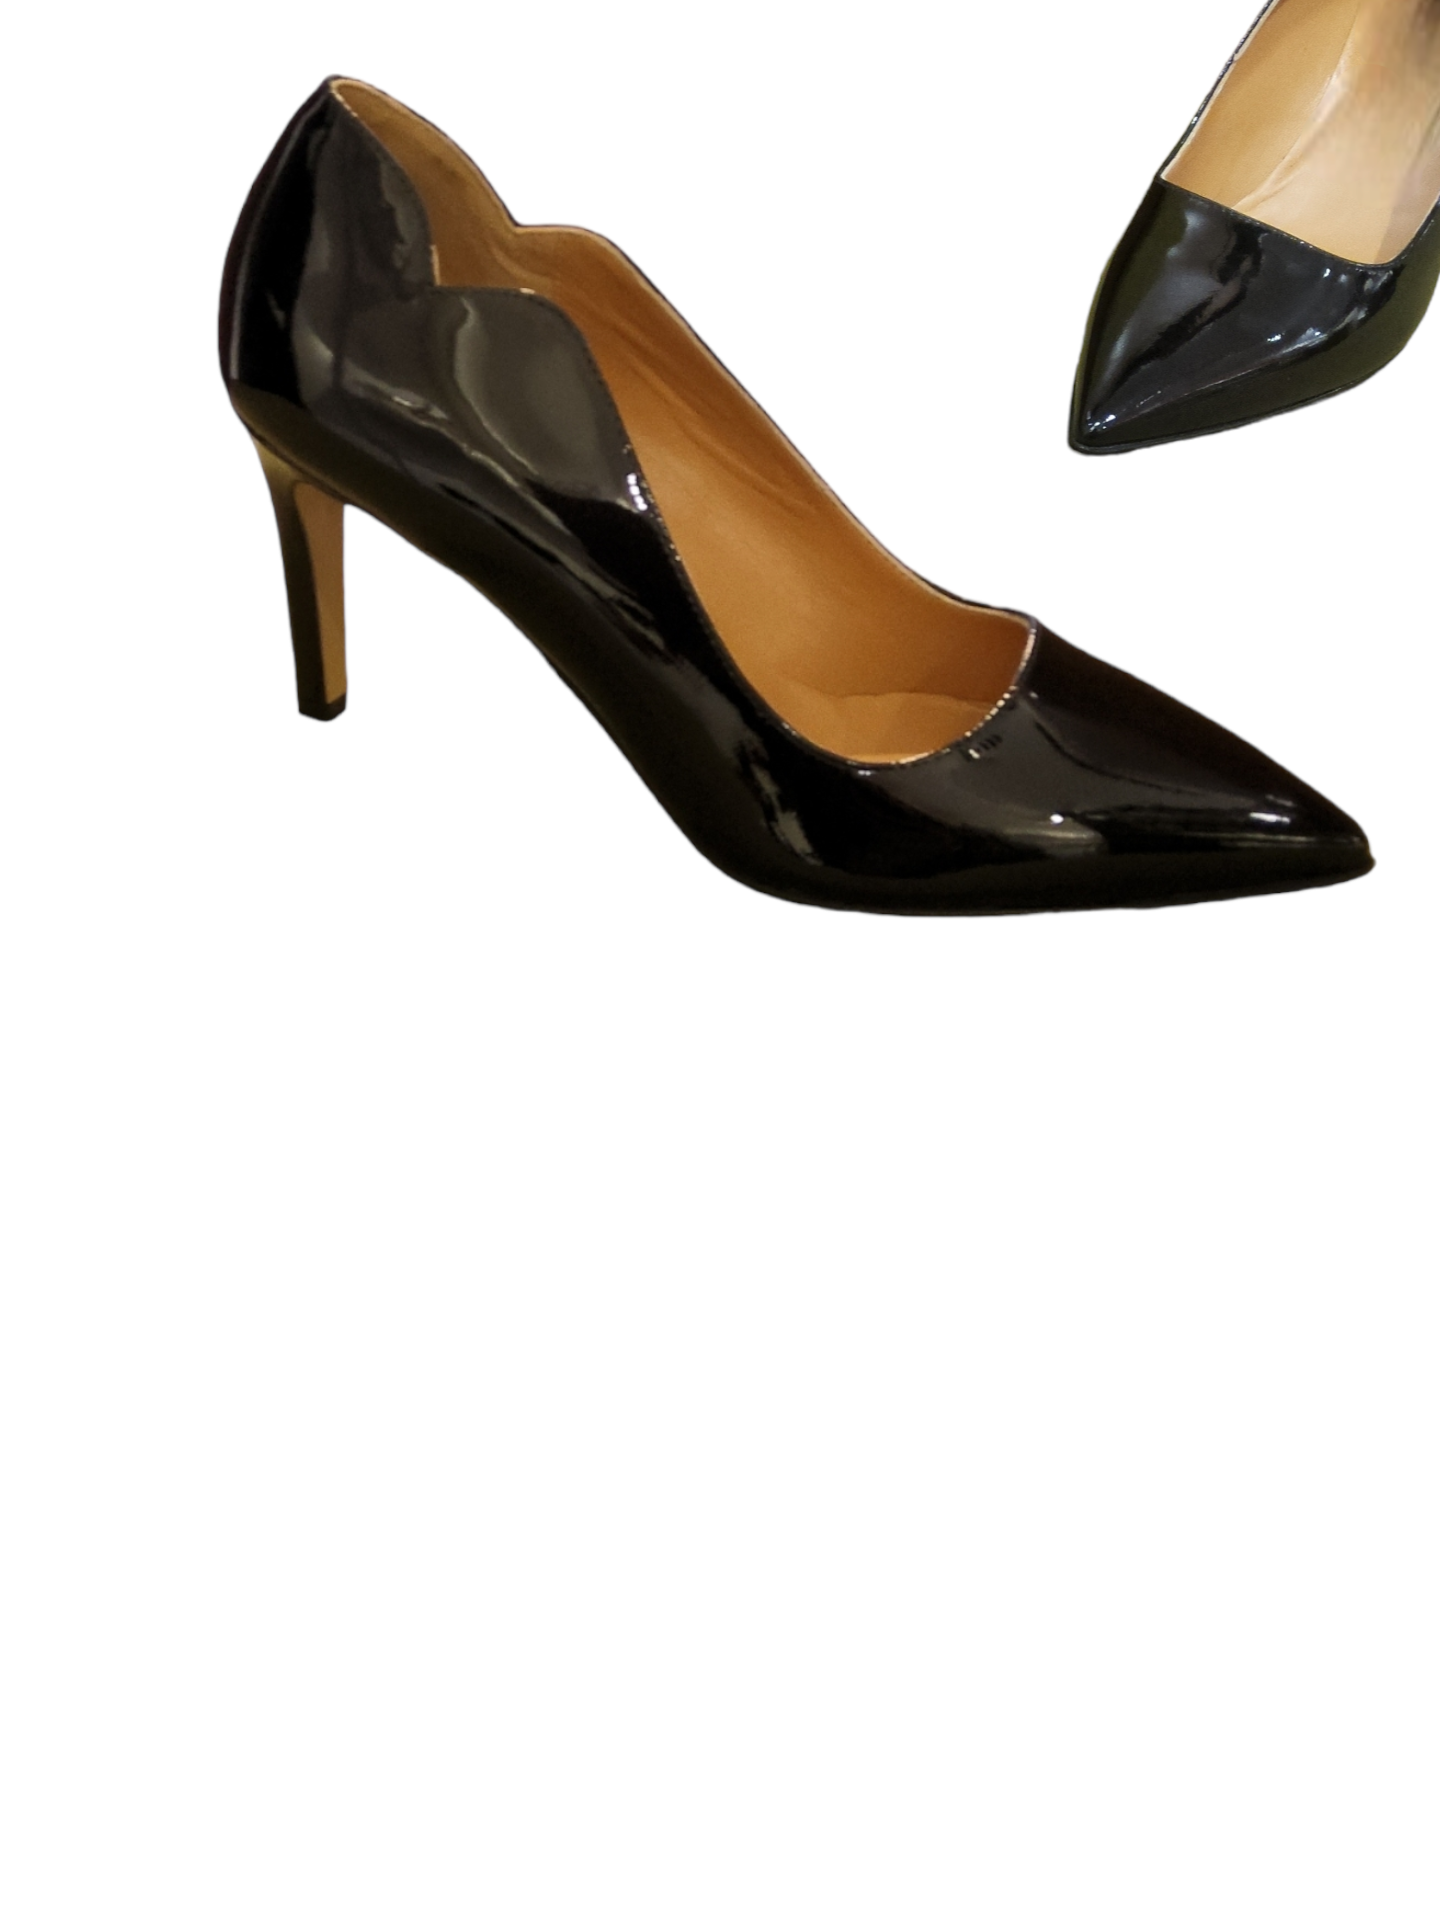 Black Patent leather court shoes